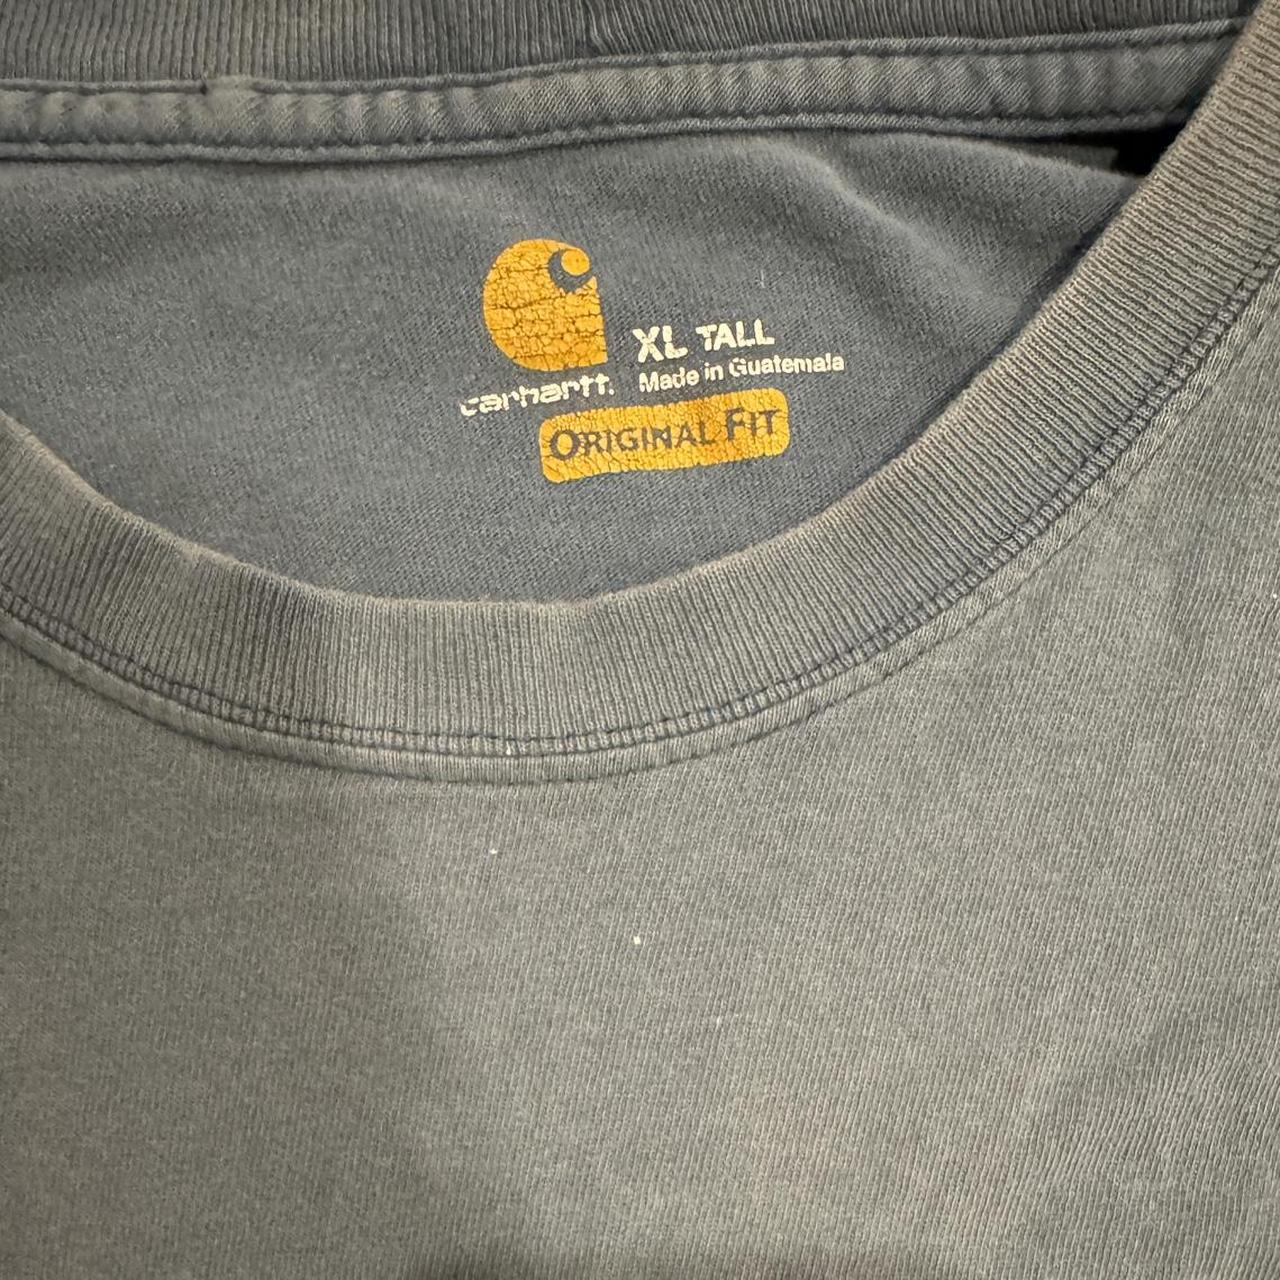 Carhartt. Tall, Original Fit T-Shirt | Size XL-Tall... - Depop